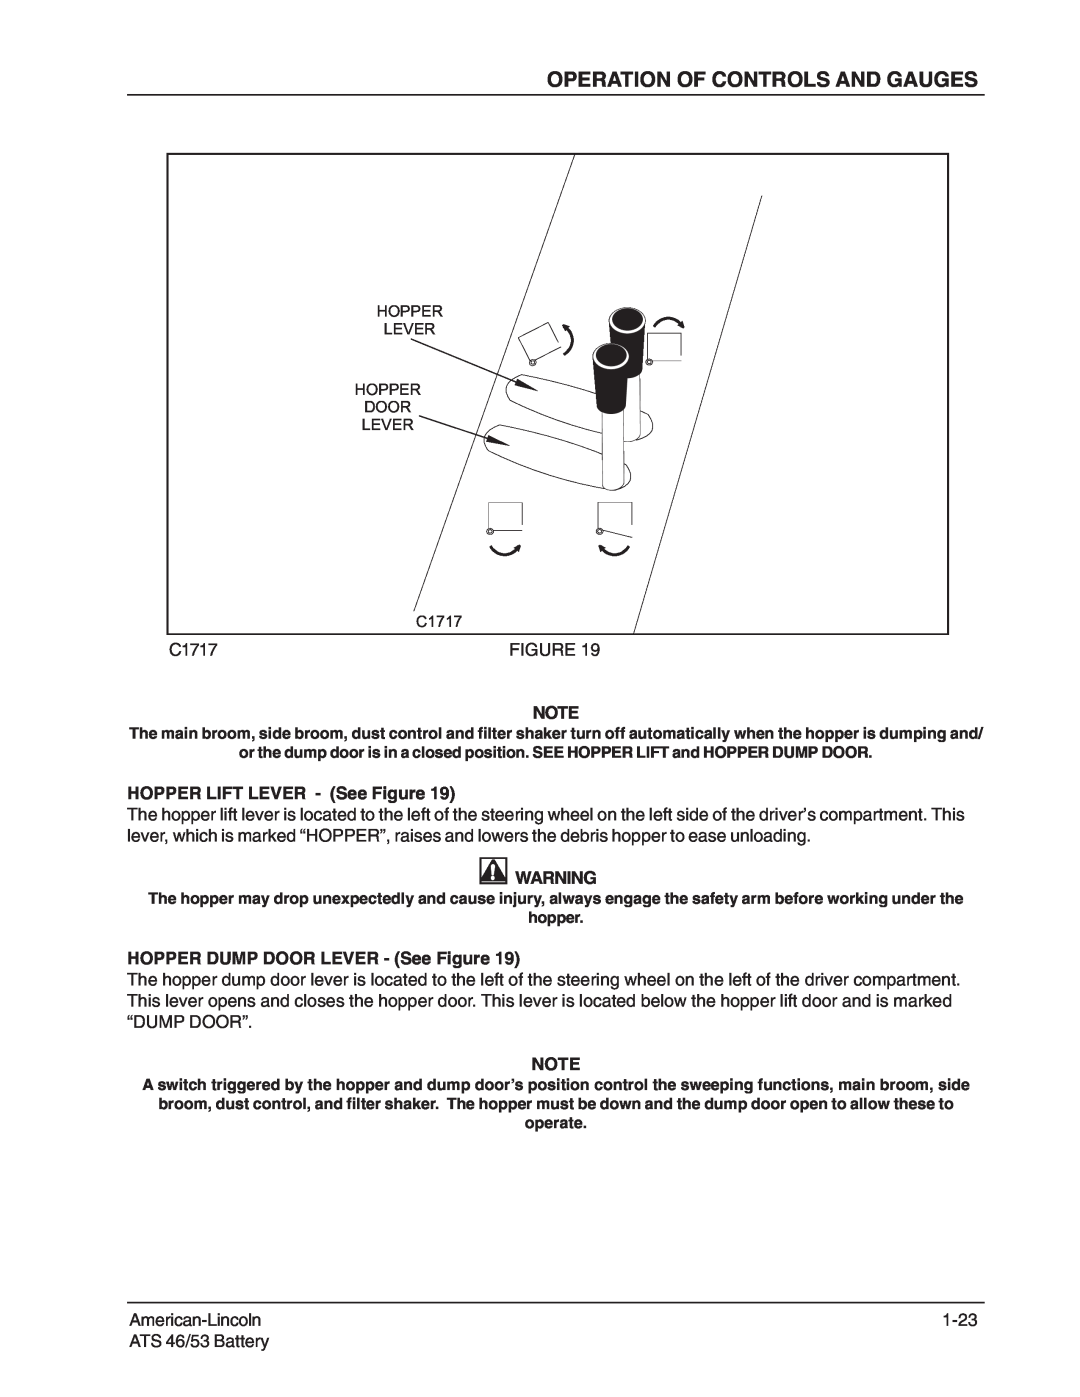 Nilfisk-ALTO 46/53 manual HOPPER LIFT LEVER - See Figure, HOPPER DUMP DOOR LEVER - See Figure 